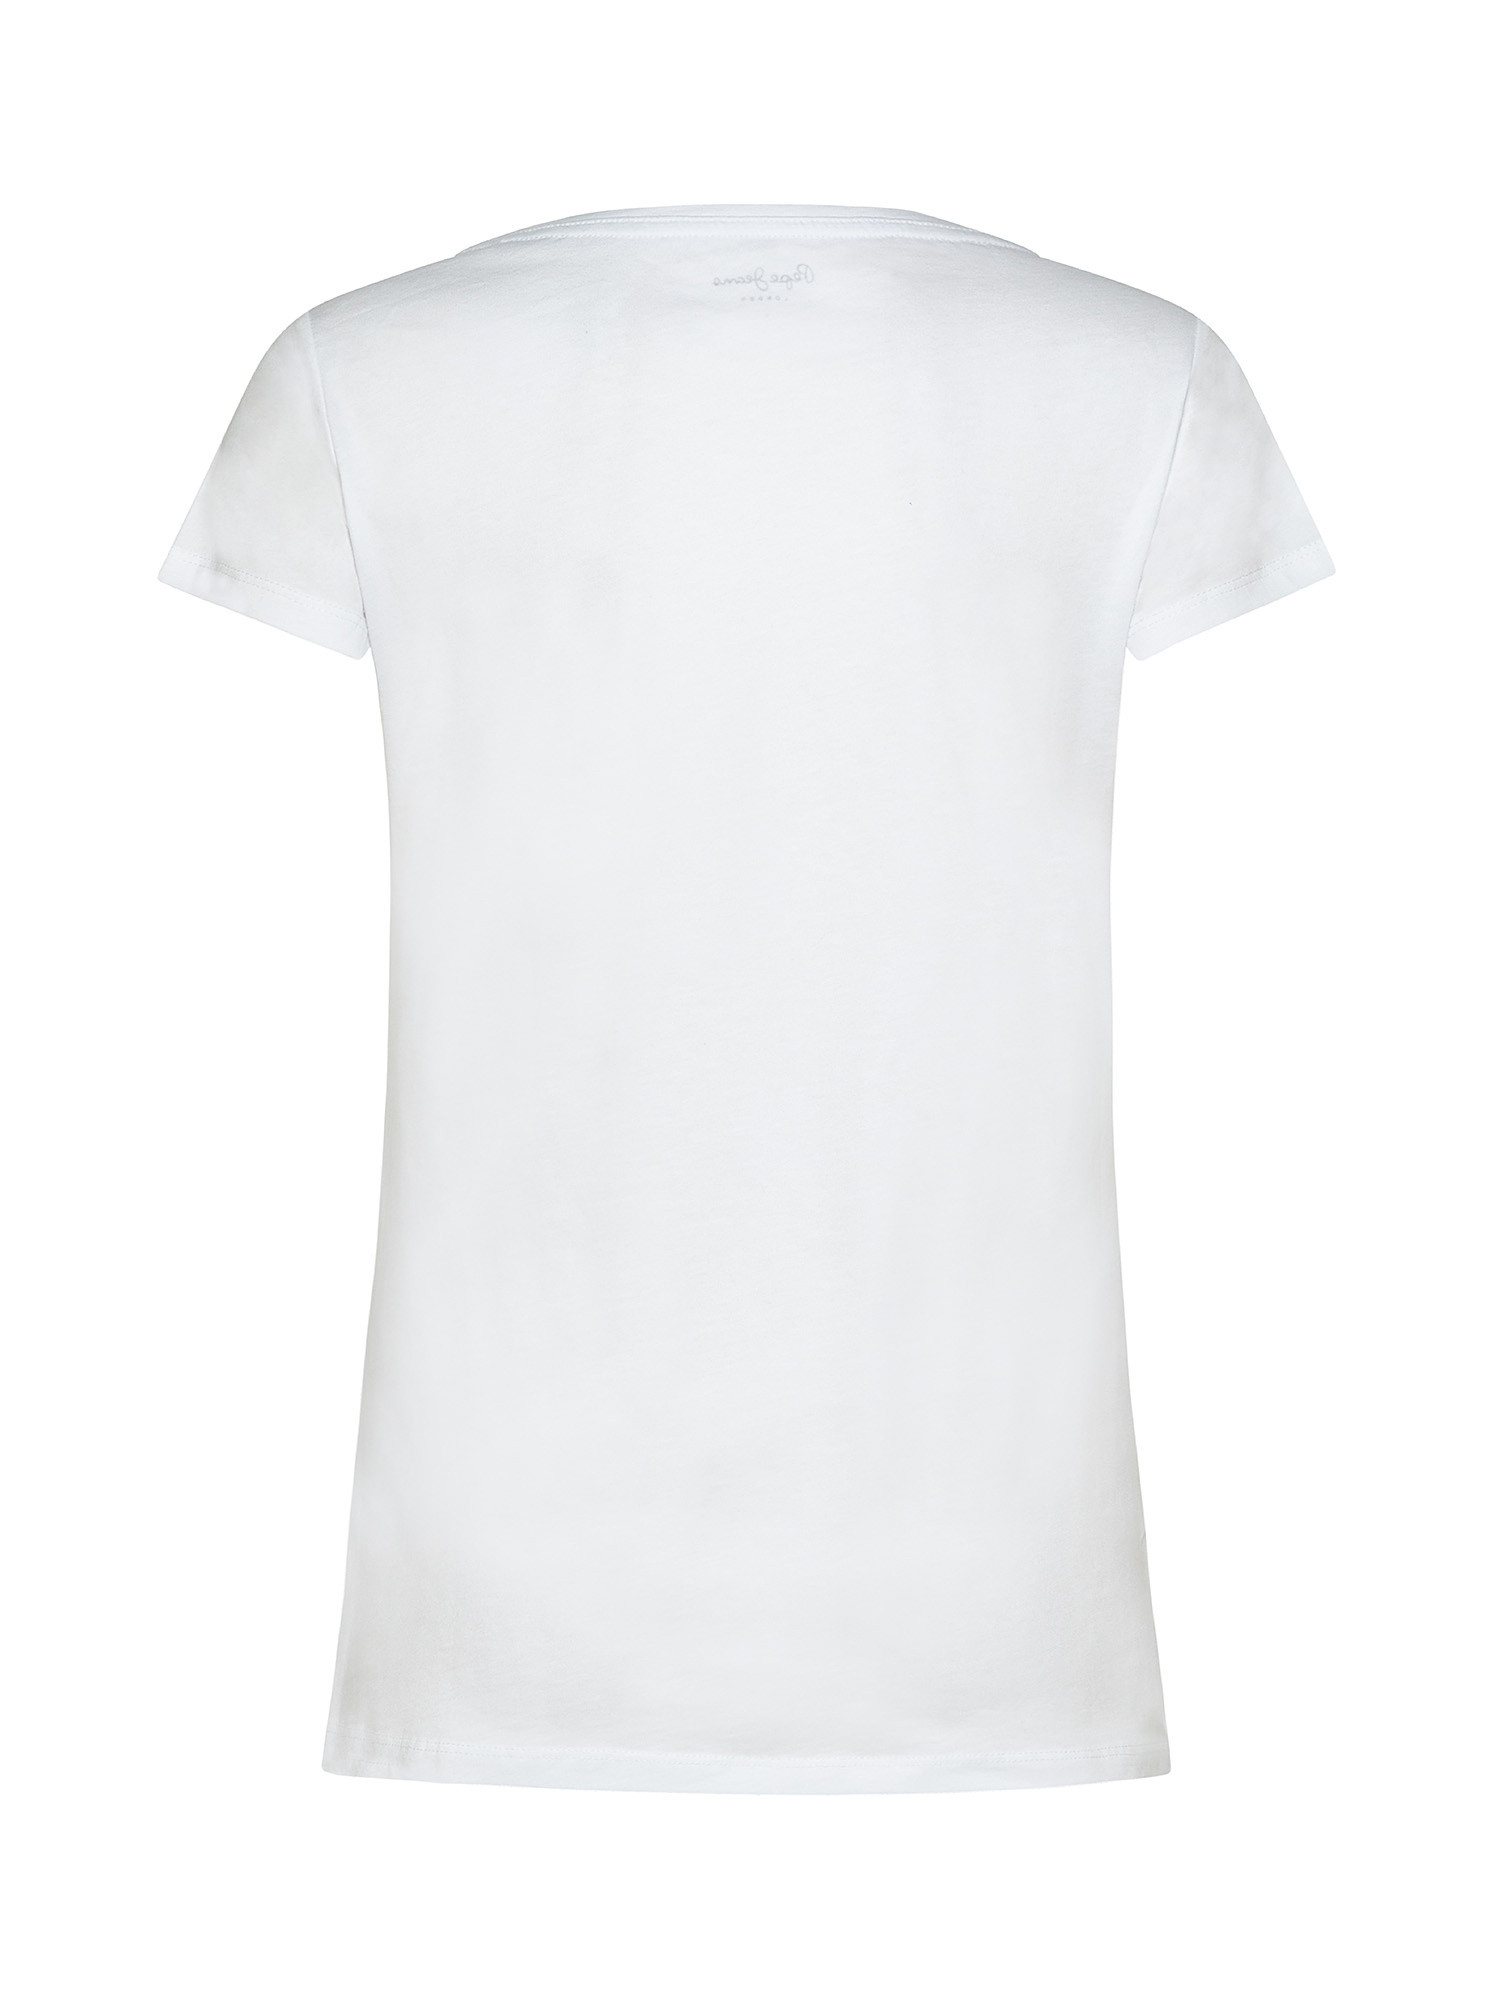 Azcu flag and logo t-shirt, White, large image number 1